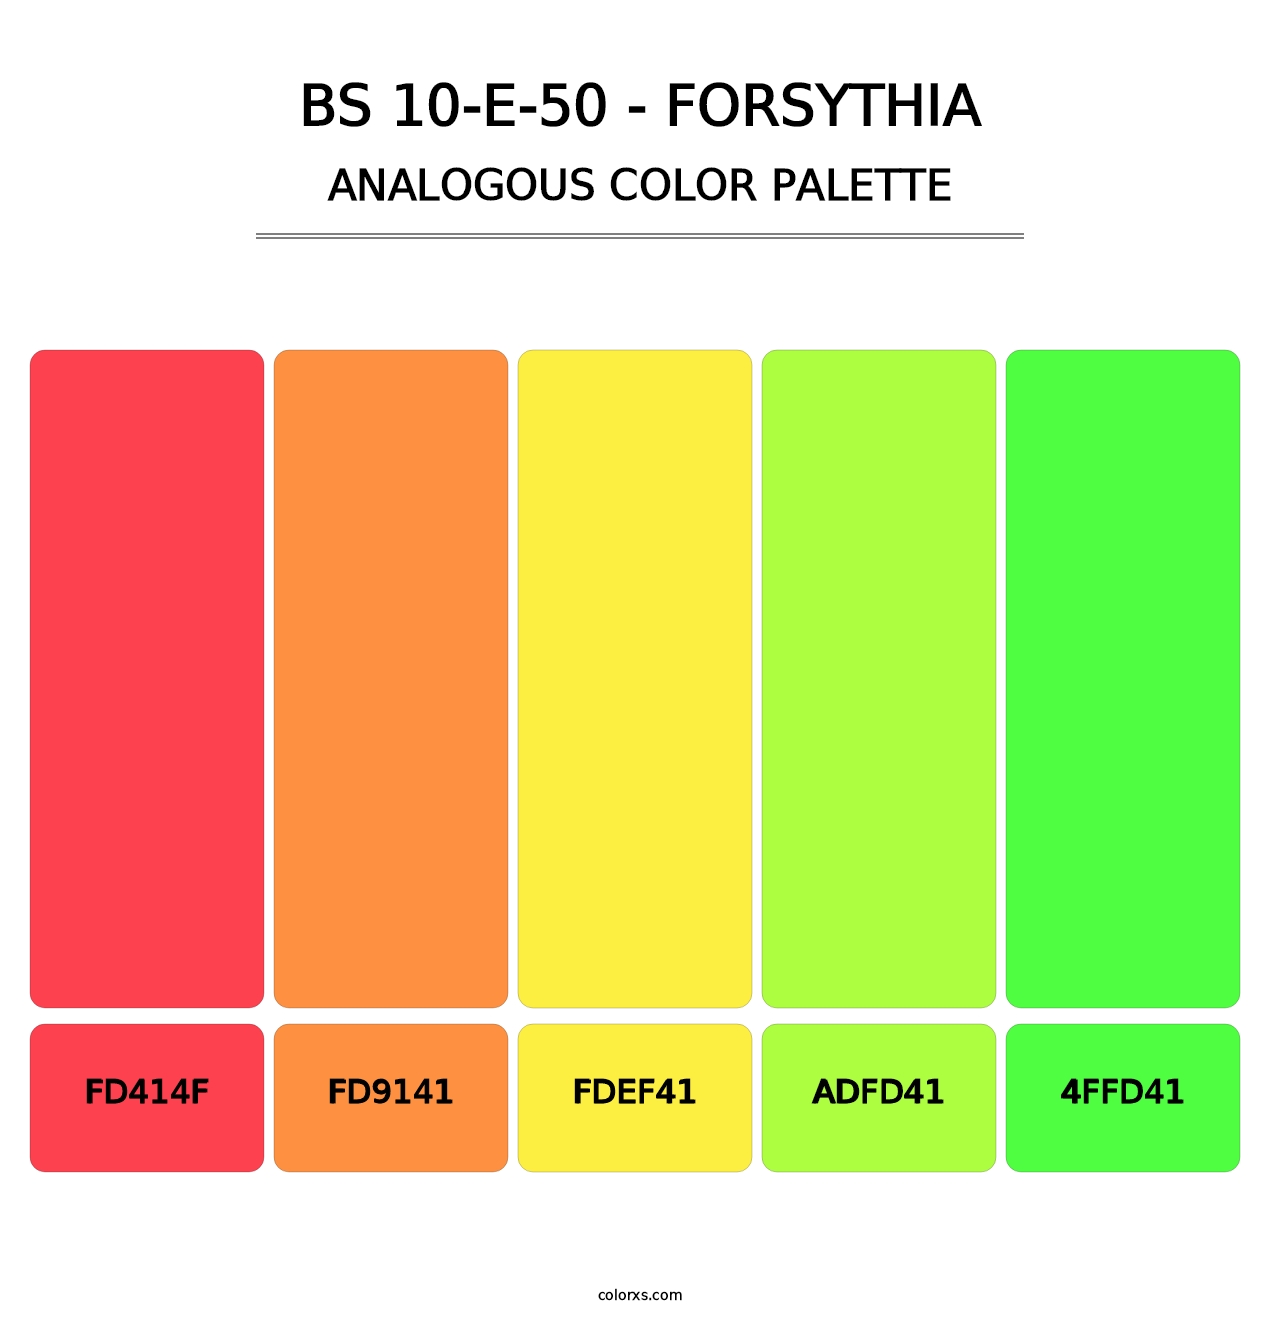 BS 10-E-50 - Forsythia - Analogous Color Palette